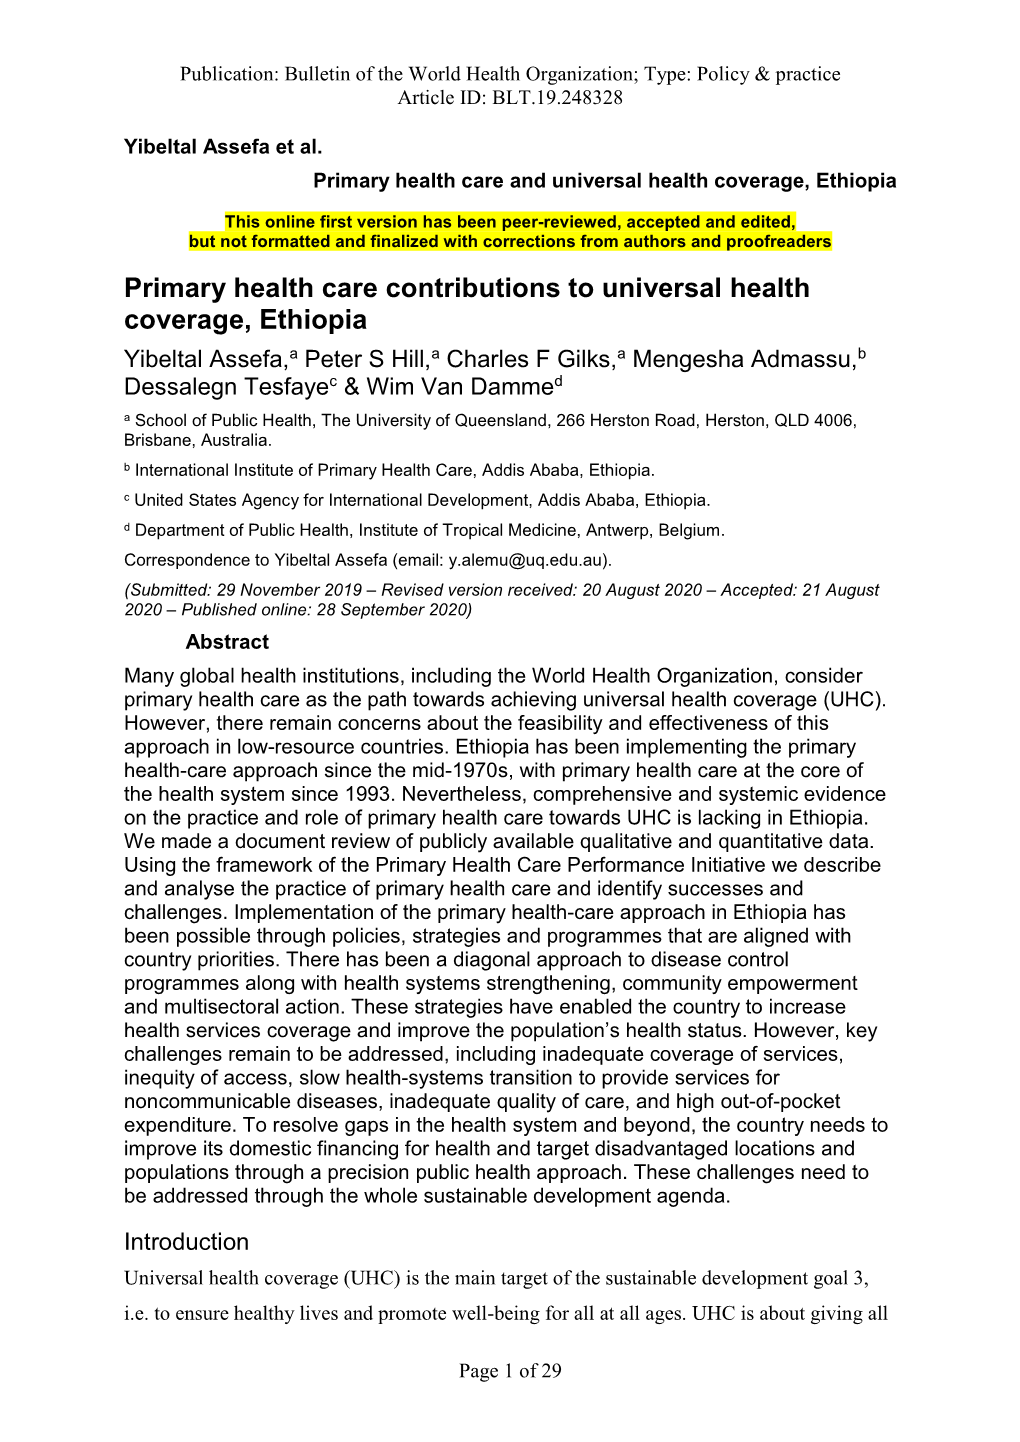 Primary Health Care Contributions to Universal Health Coverage, Ethiopia